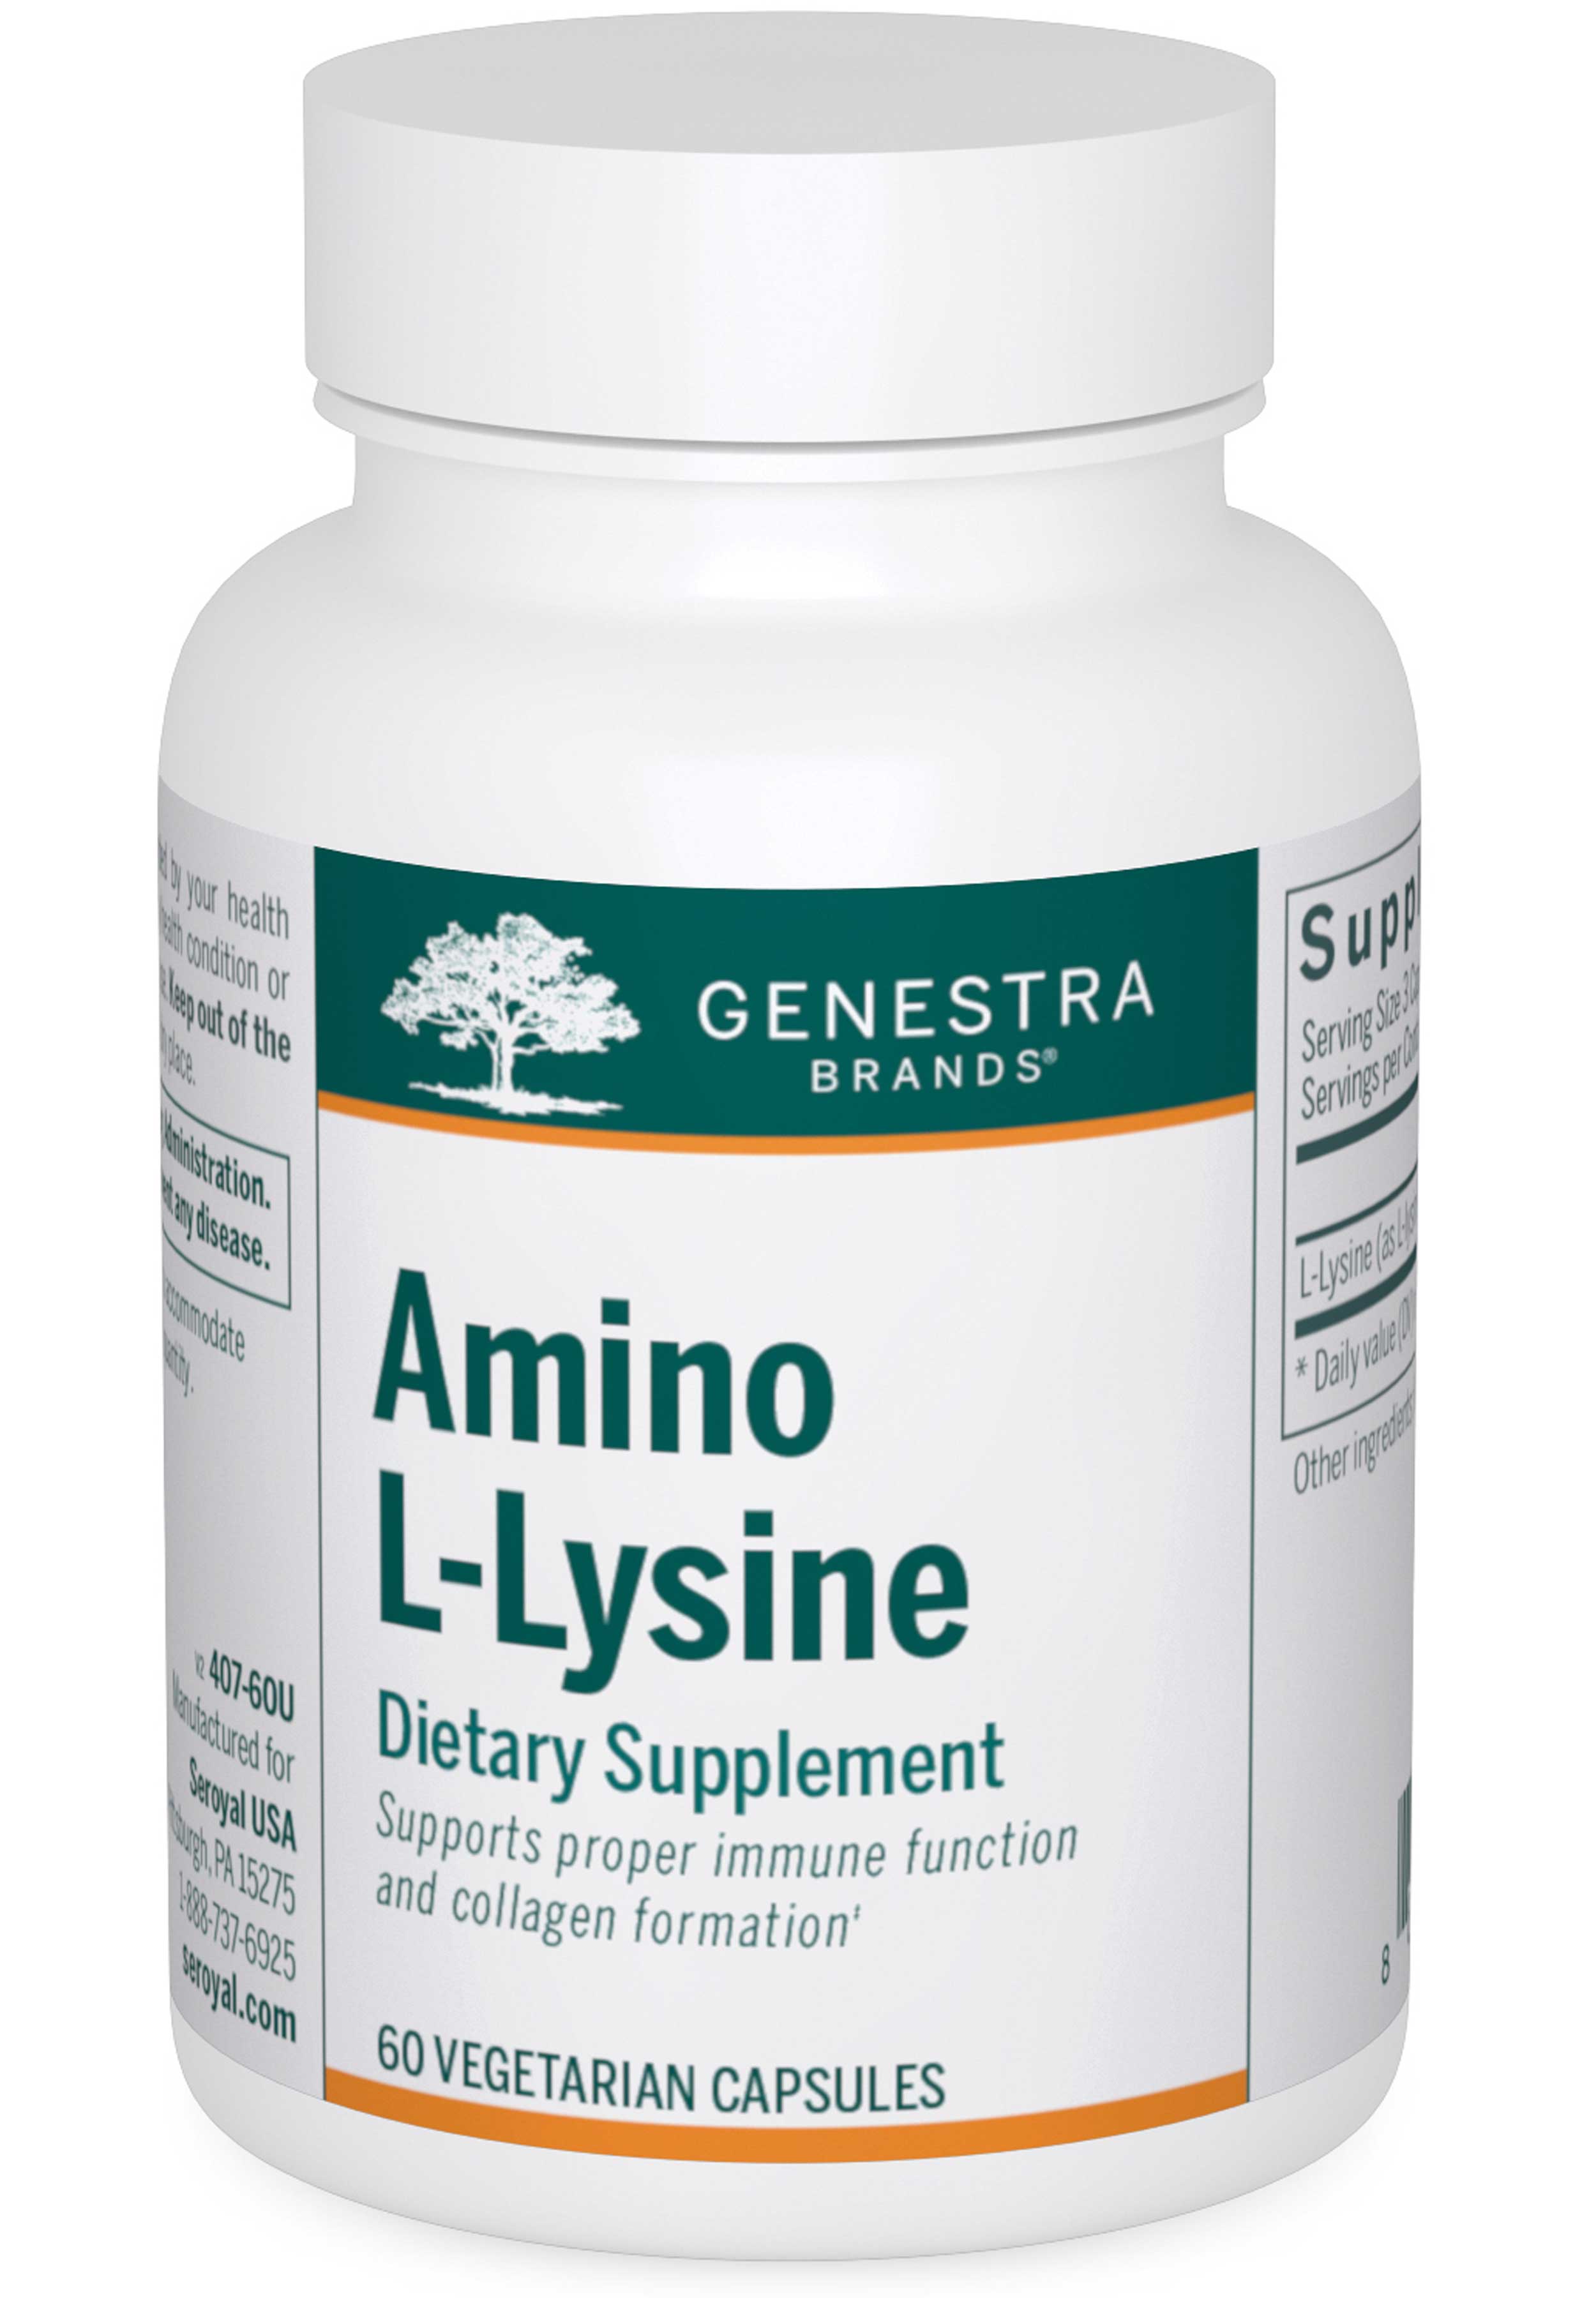 Genestra Brands Amino L-Lysine